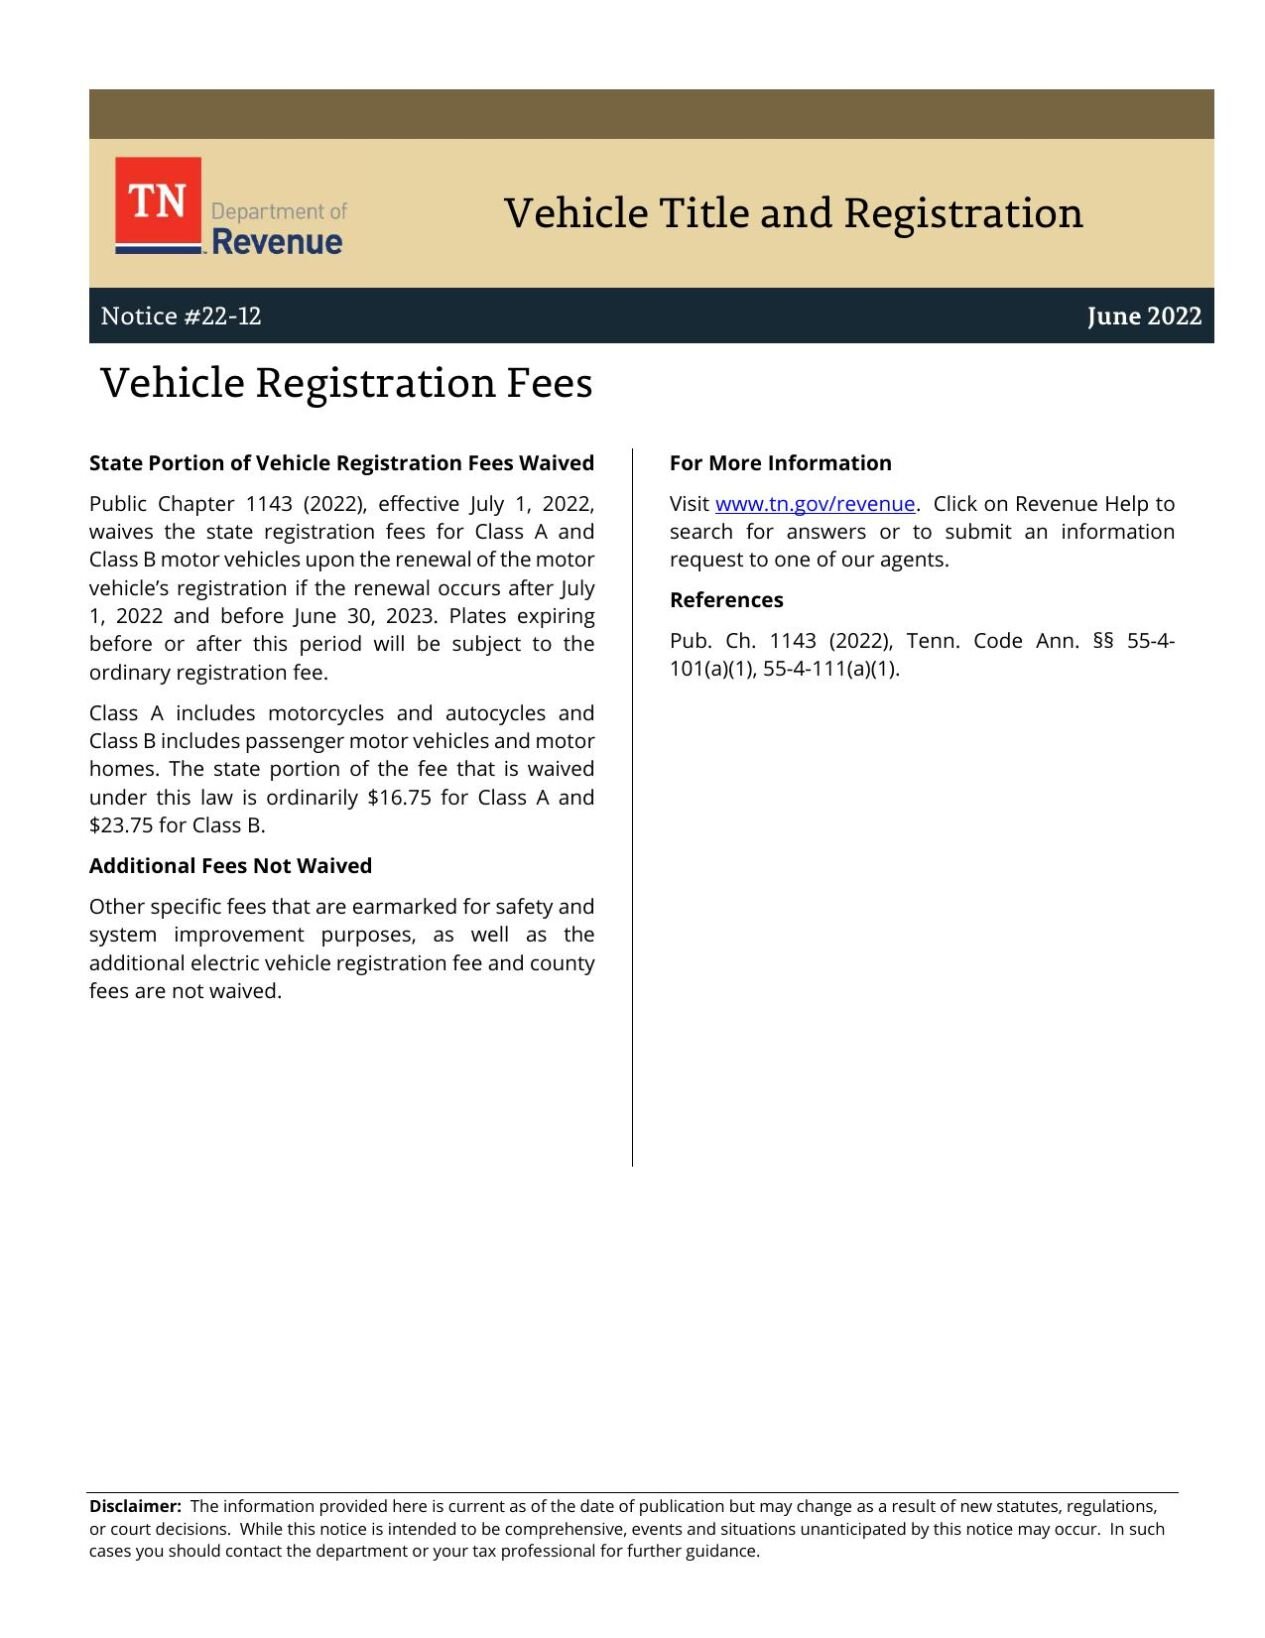 TN Vehicle Registration Fees